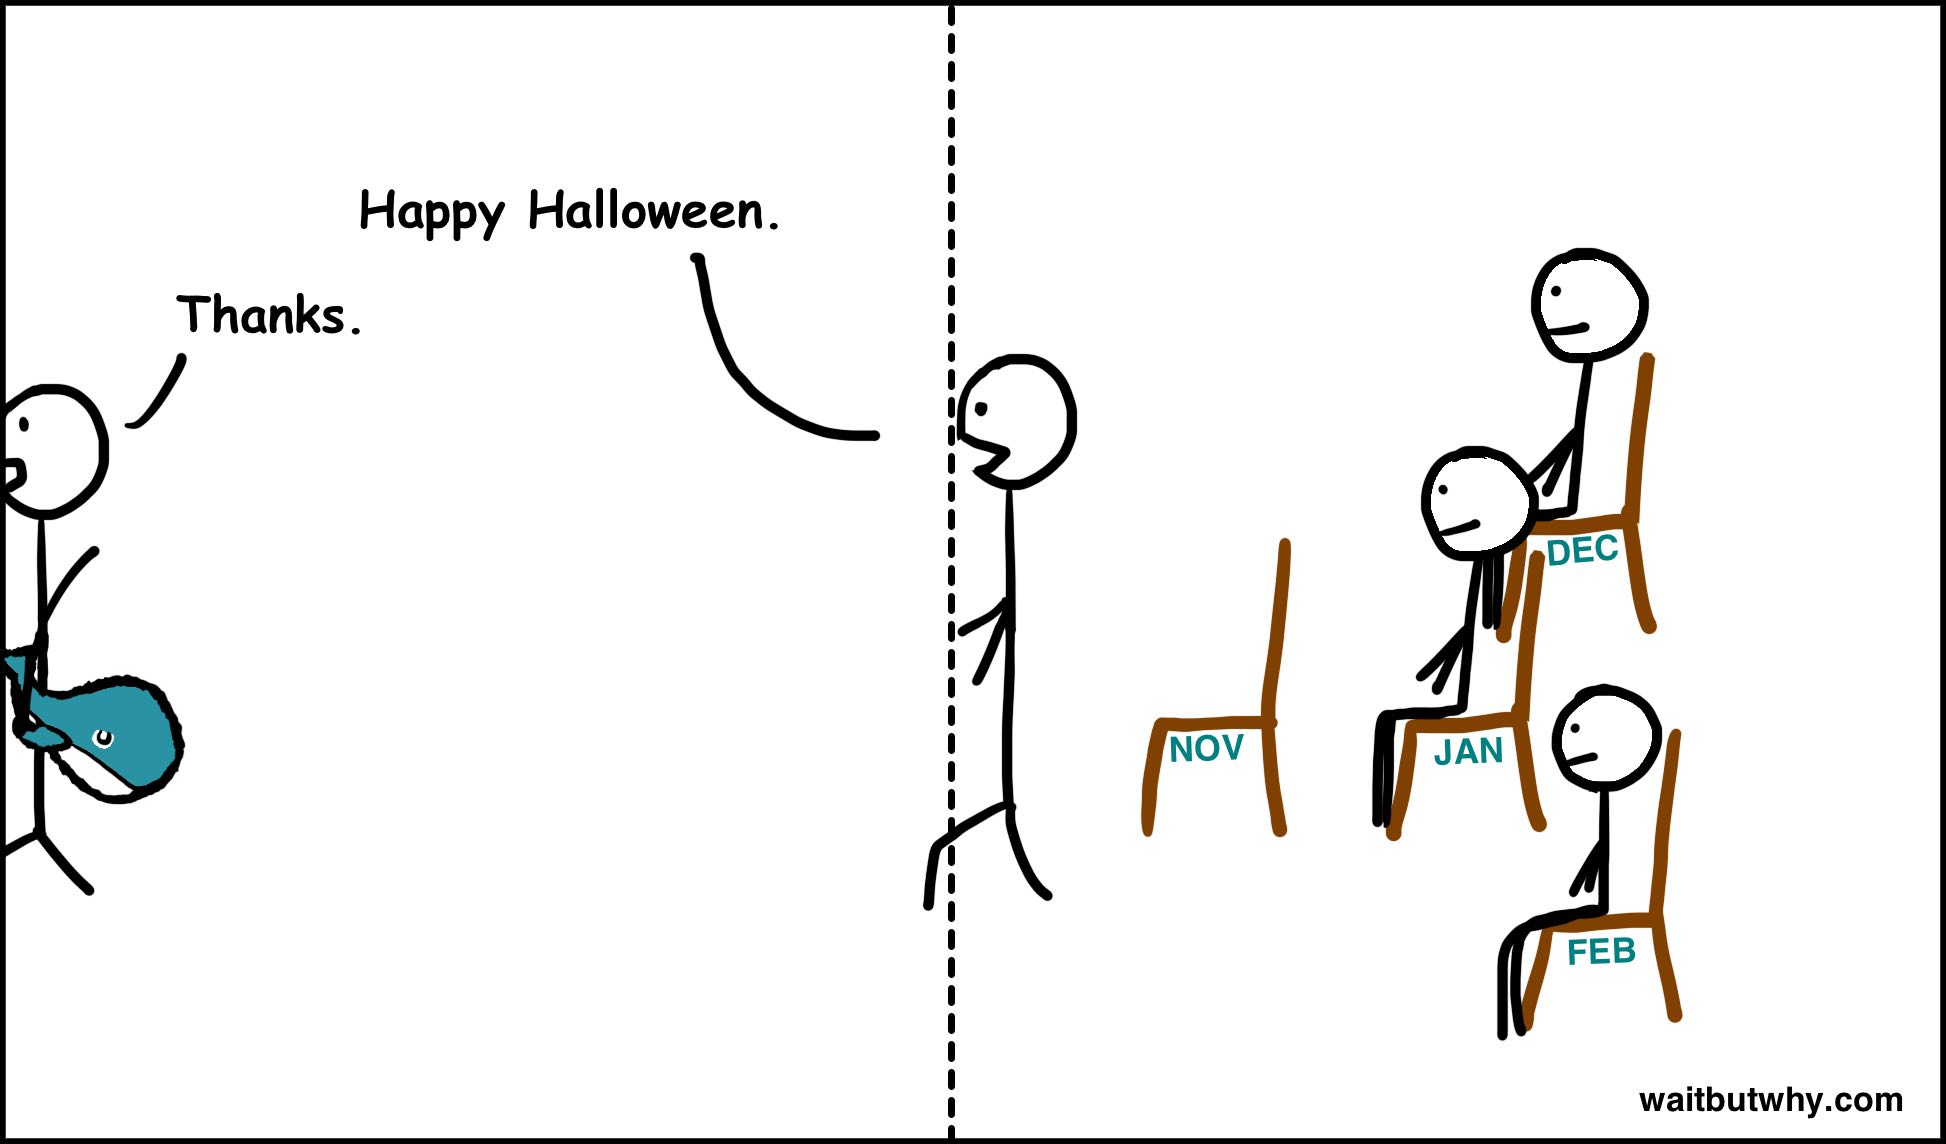 Nov: Happy Halloween. Oct: Thanks.